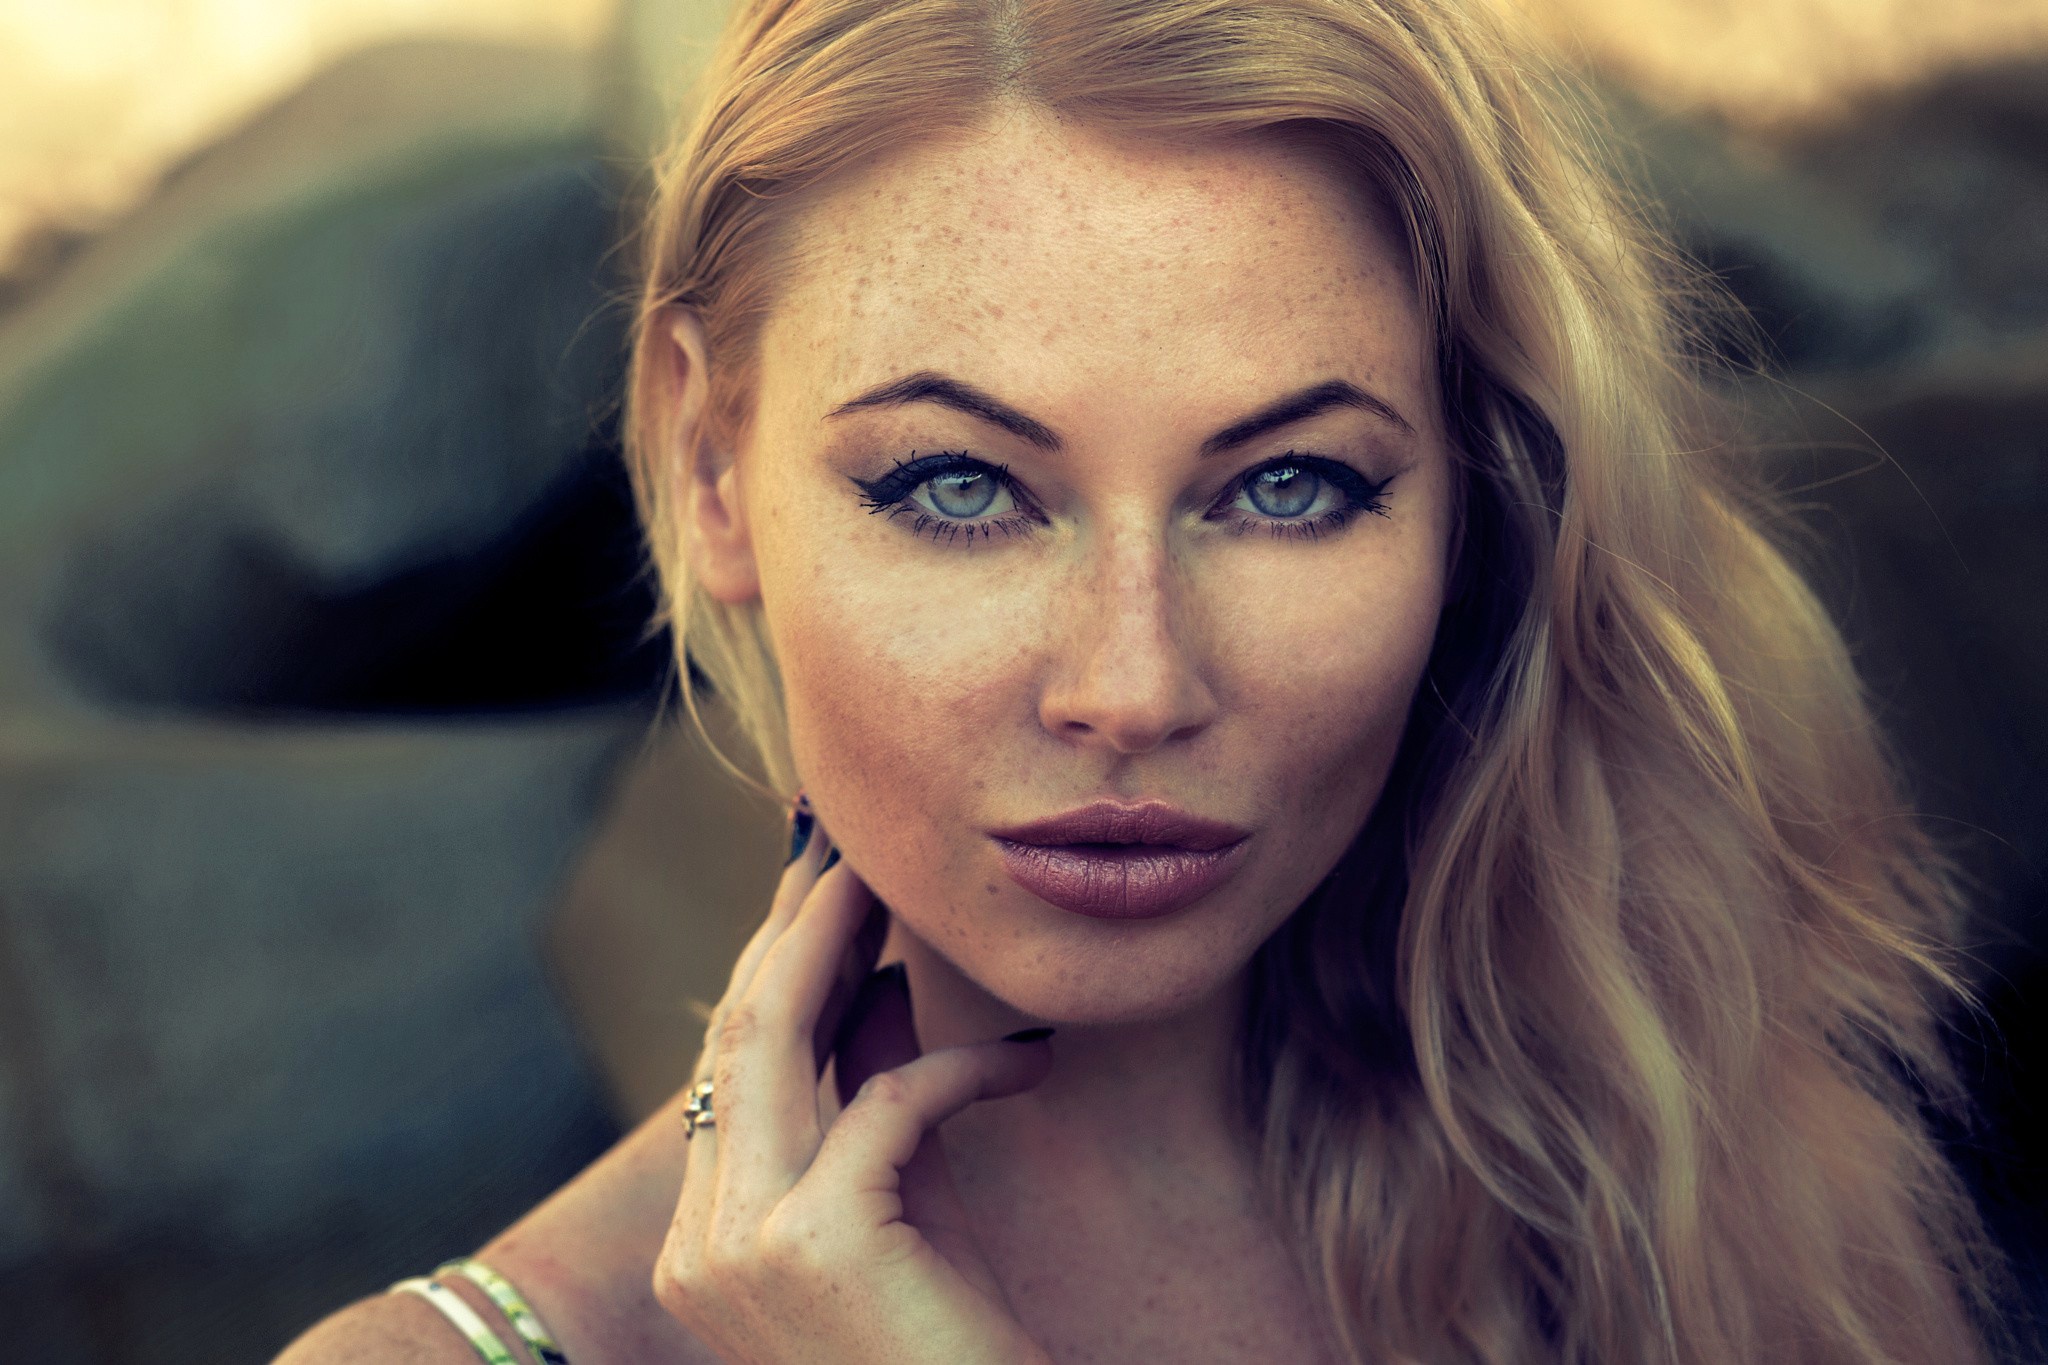 Download Freckles Blonde Woman Face Hd Wallpaper